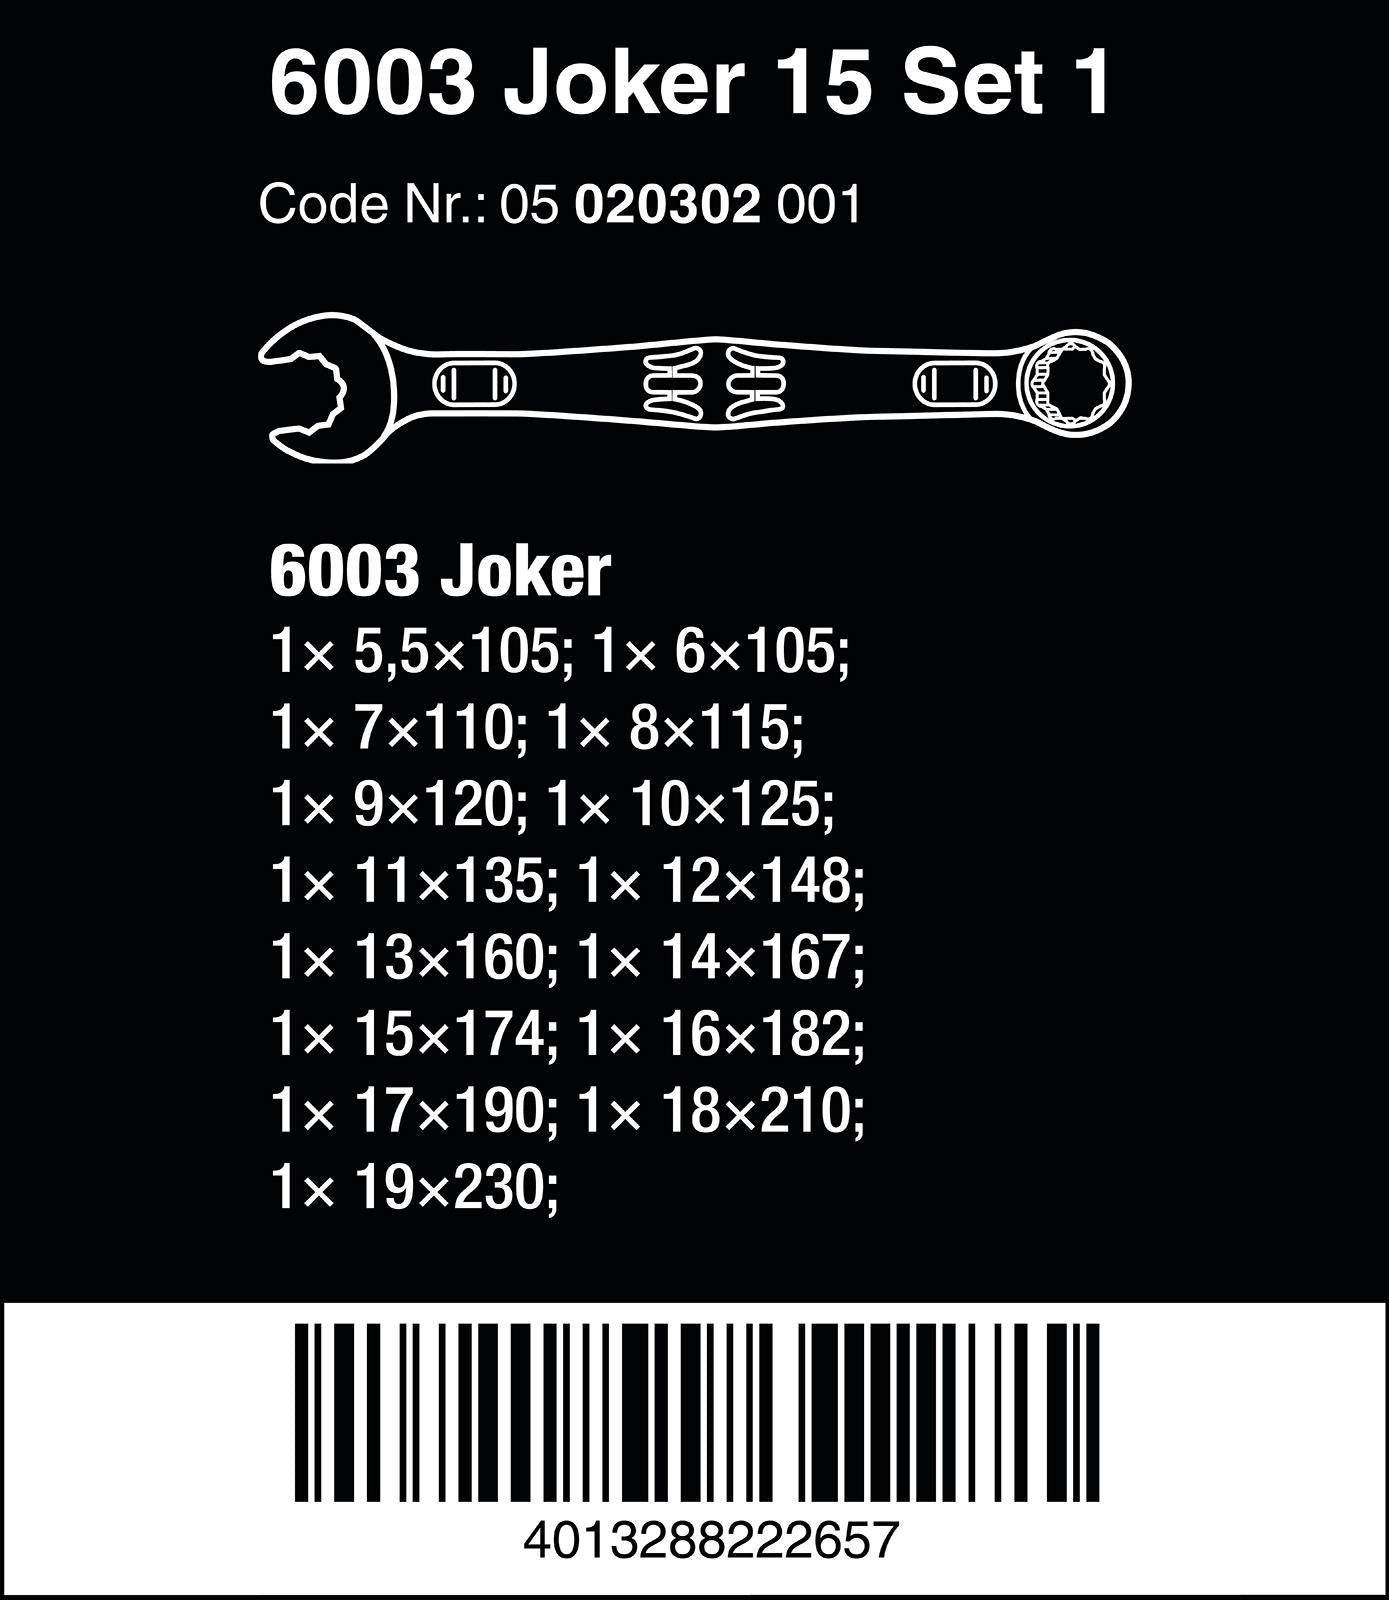 Wera Combination Spanner Wrench Set 6003 Joker 15 Set 1 Metric 15 Pieces 5.5-19mm